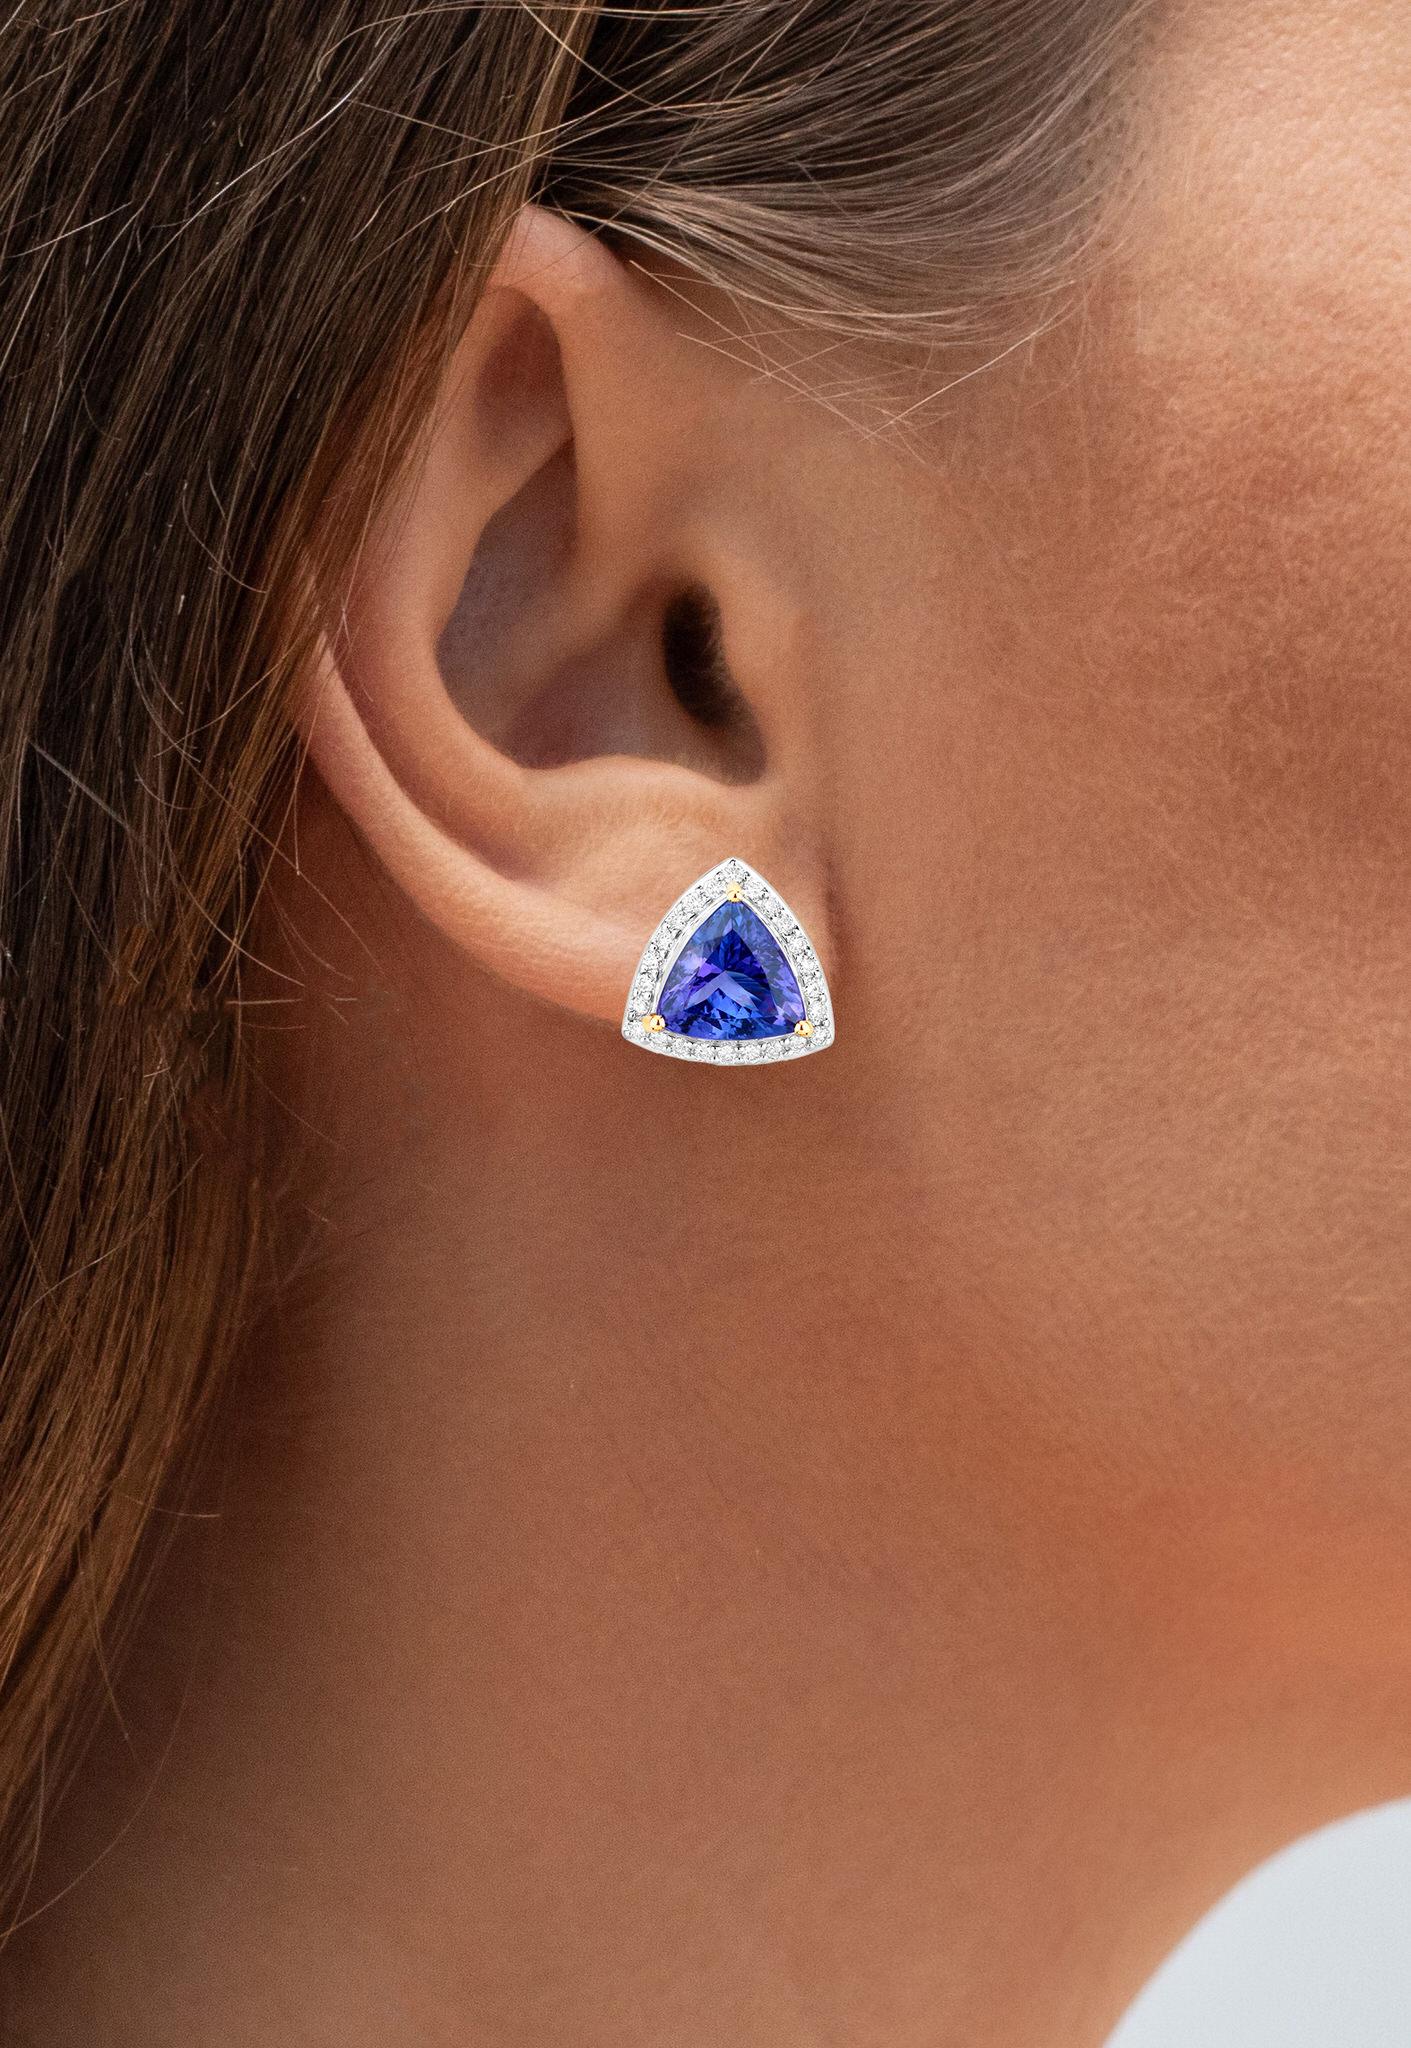 Contemporary Trillion Cut Tanzanite Stud Earrings Diamond Halo 4.74 Carats 14K Gold For Sale